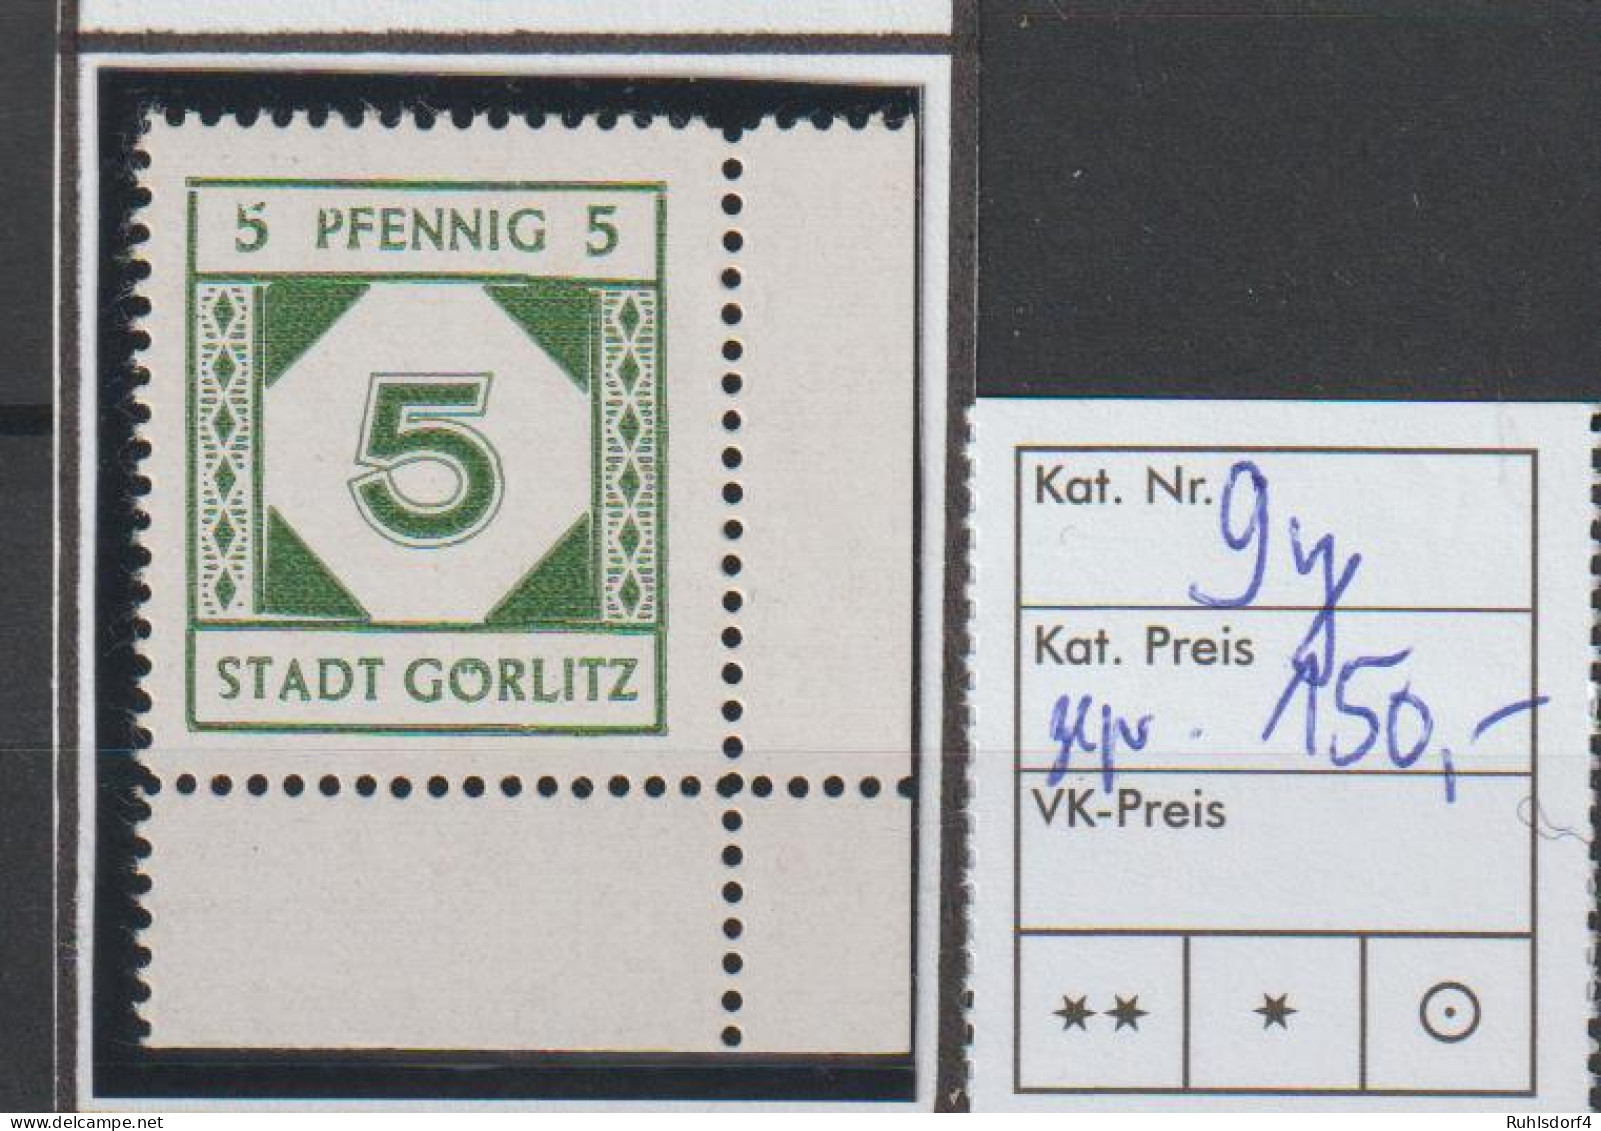 Görlitz 9y, Geprüft Kunz BPP, Eckrandstück, ** (MNH) - Postfris